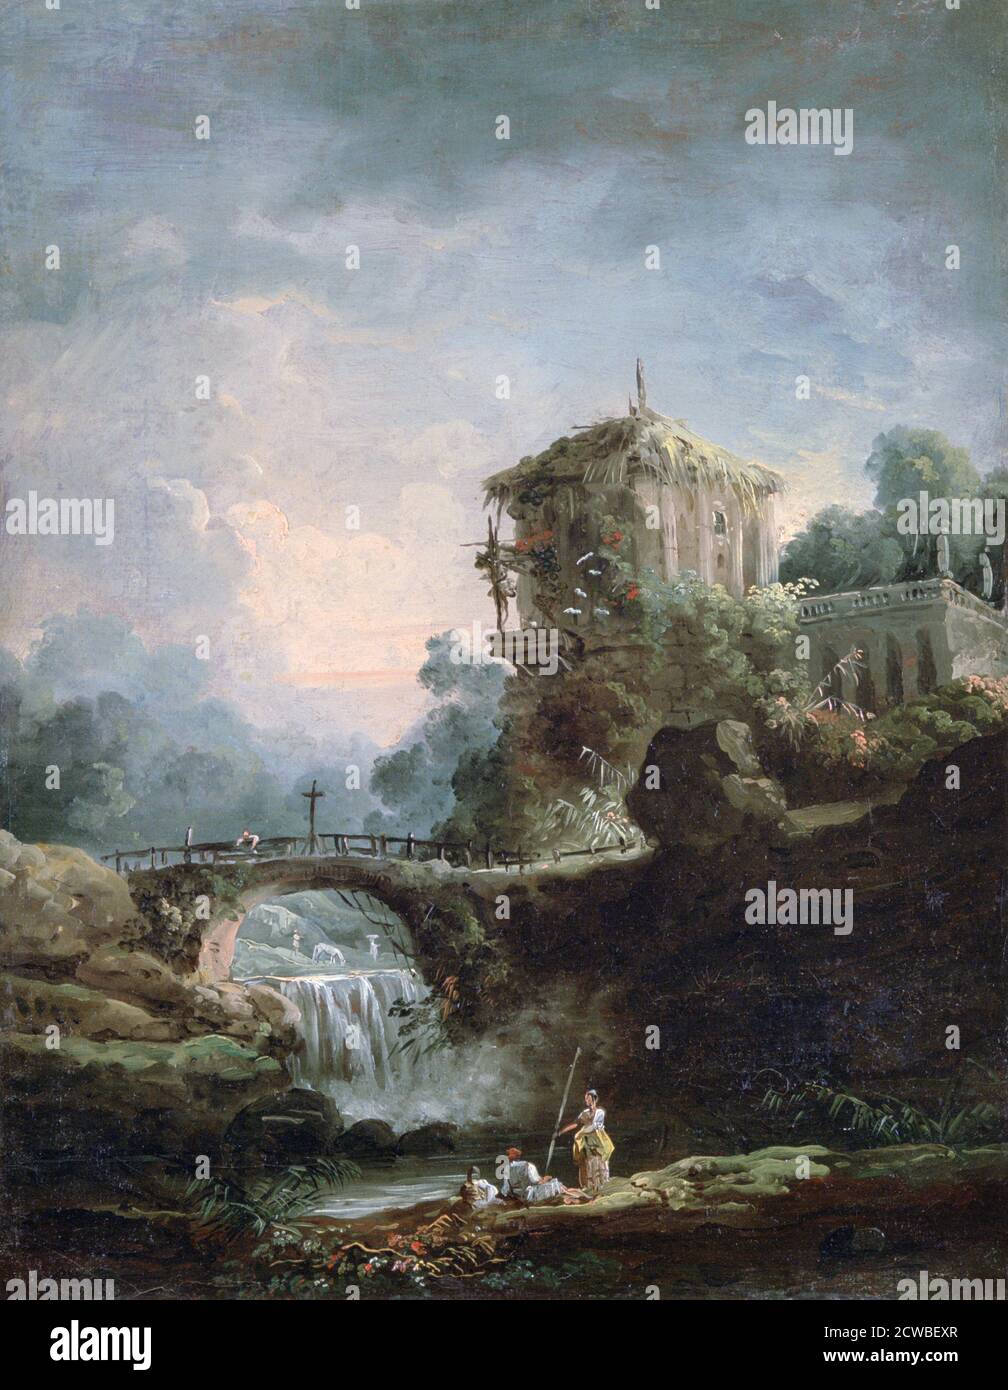 Landscape with Waterfall', c1750-1808, artista: Hubert Robert. Hubert Robert (1733-1808) è stato un pittore francese dell'epoca rococò. Foto Stock